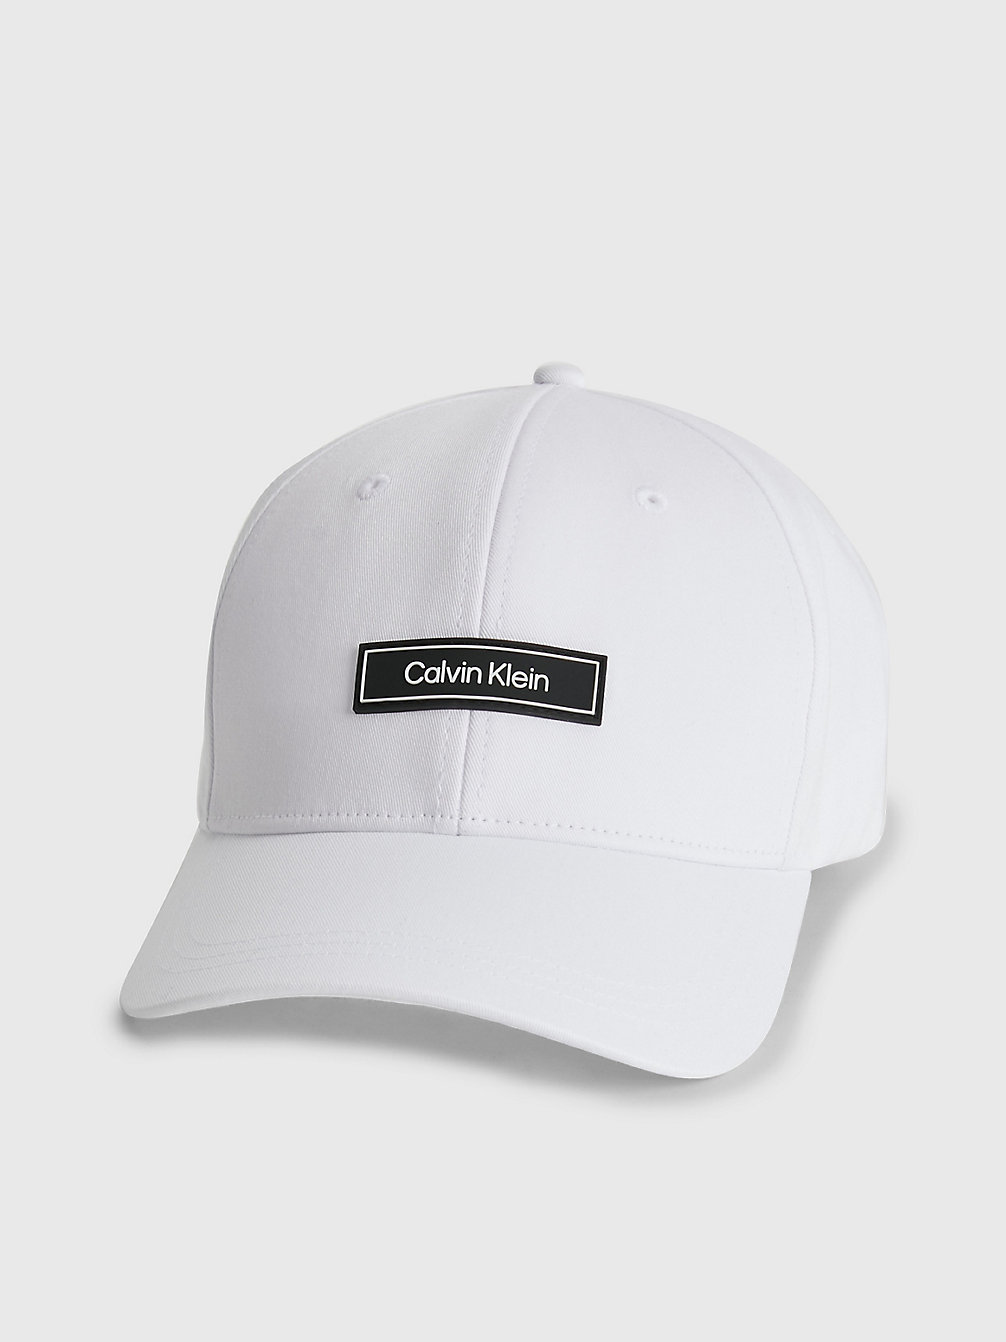 PVH CLASSIC WHITE Organic Cotton Cap undefined unisex Calvin Klein